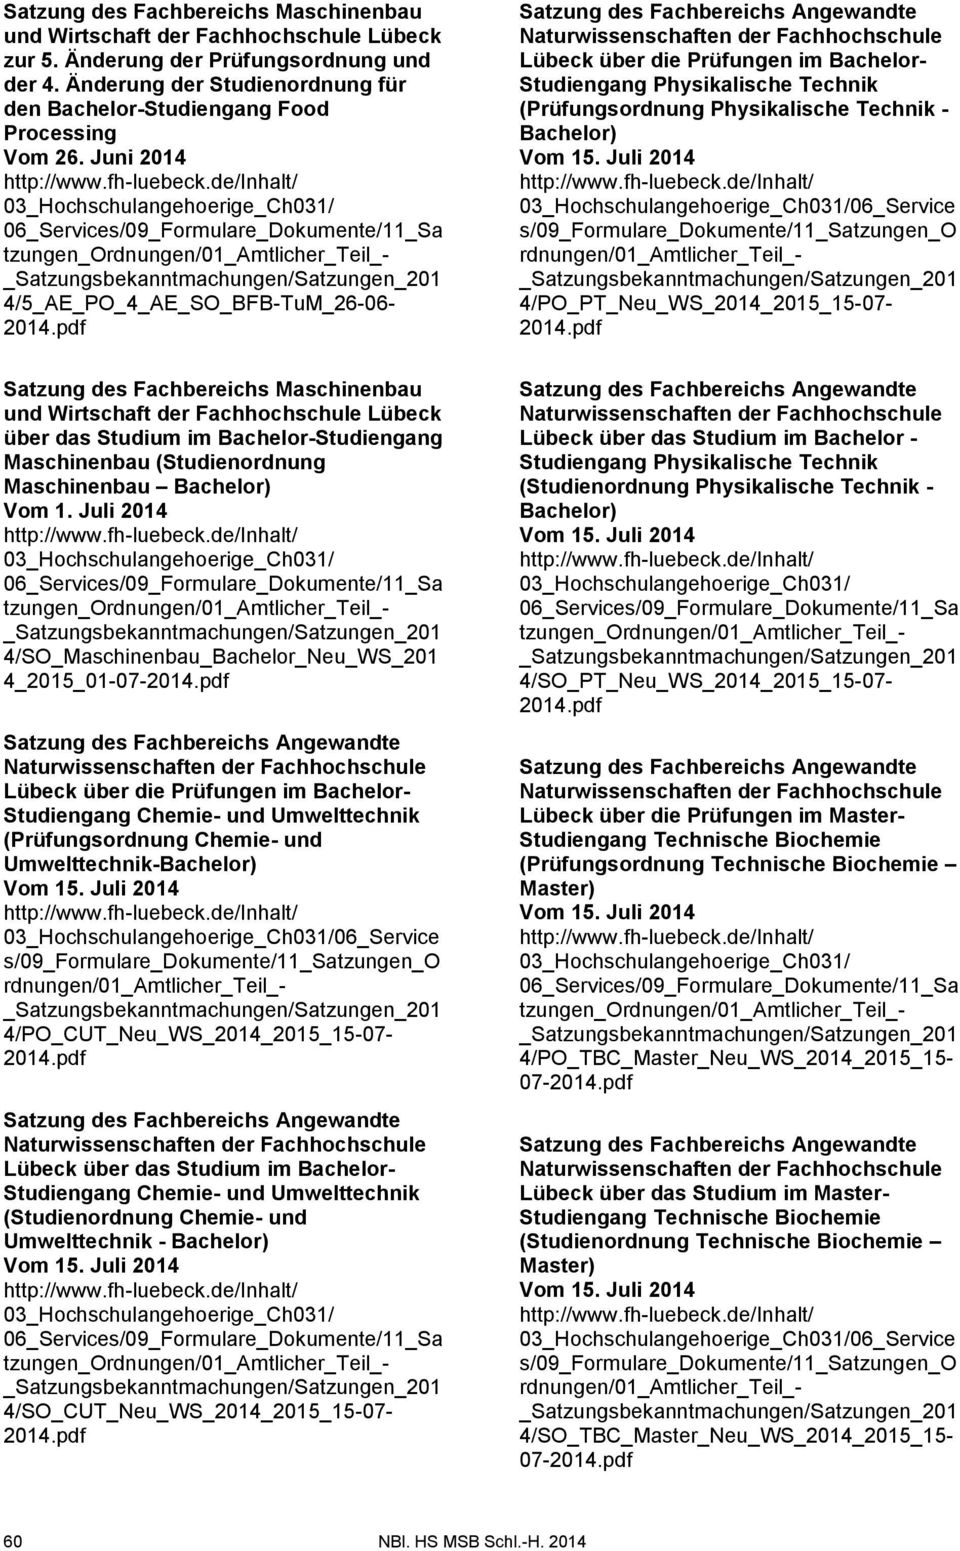 pdf über das Studium im Bachelor-Studiengang Maschinenbau (Studienordnung Maschinenbau Bachelor) Vom 1. Juli 2014 4/SO_Maschinenbau_Bachelor_Neu_WS_201 4_2015_01-07-2014.